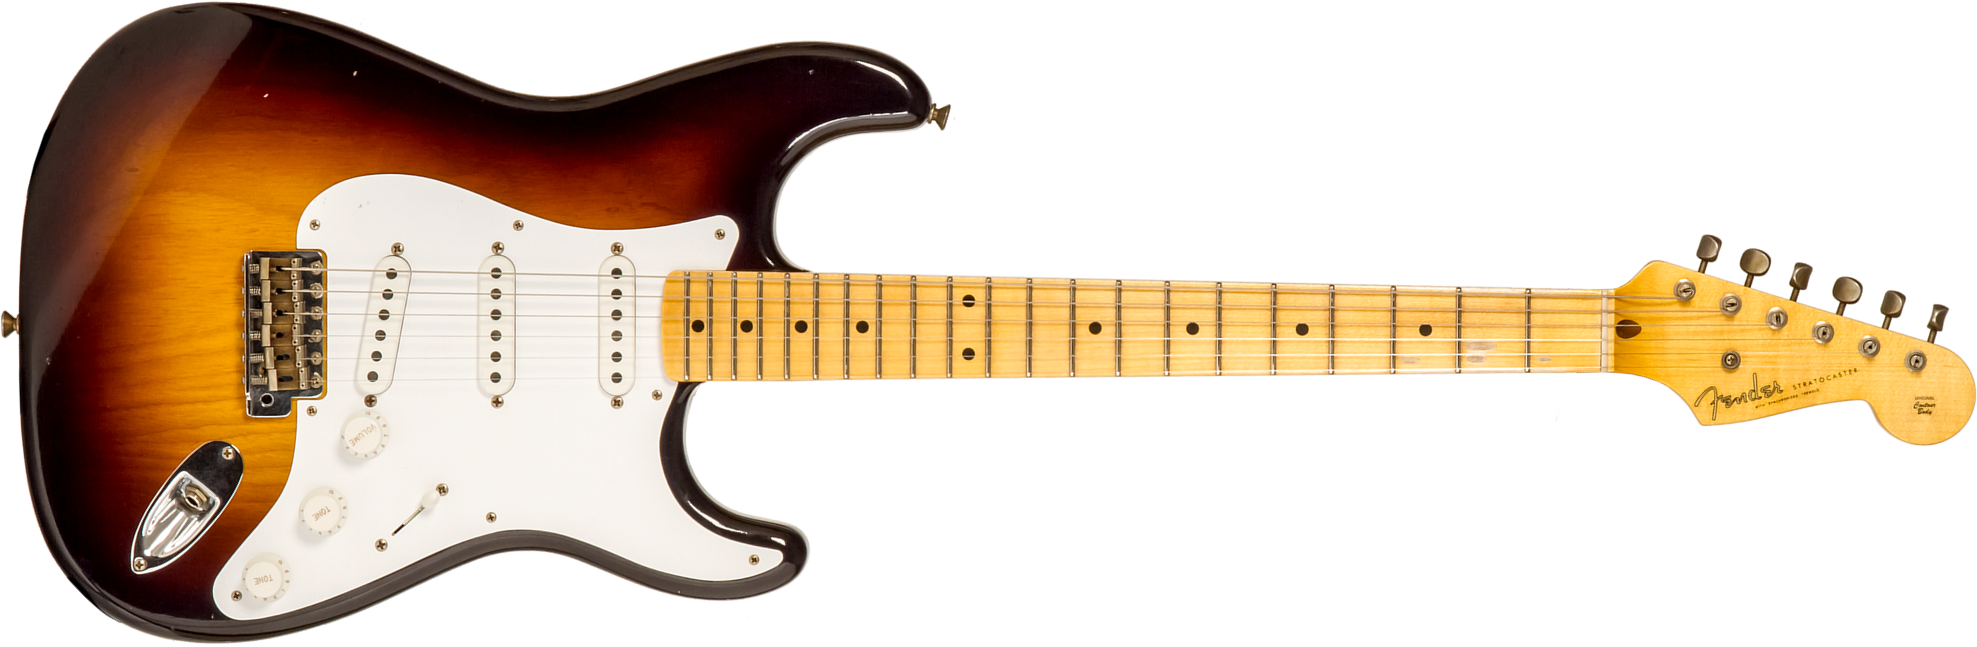 Fender Custom Shop Strat 1954 70th Anniv. 3s Trem Mn #xn4193 - Journeyman Relic Wide-fade 2-color Sunburst - Elektrische gitaar in Str-vorm - Main pic